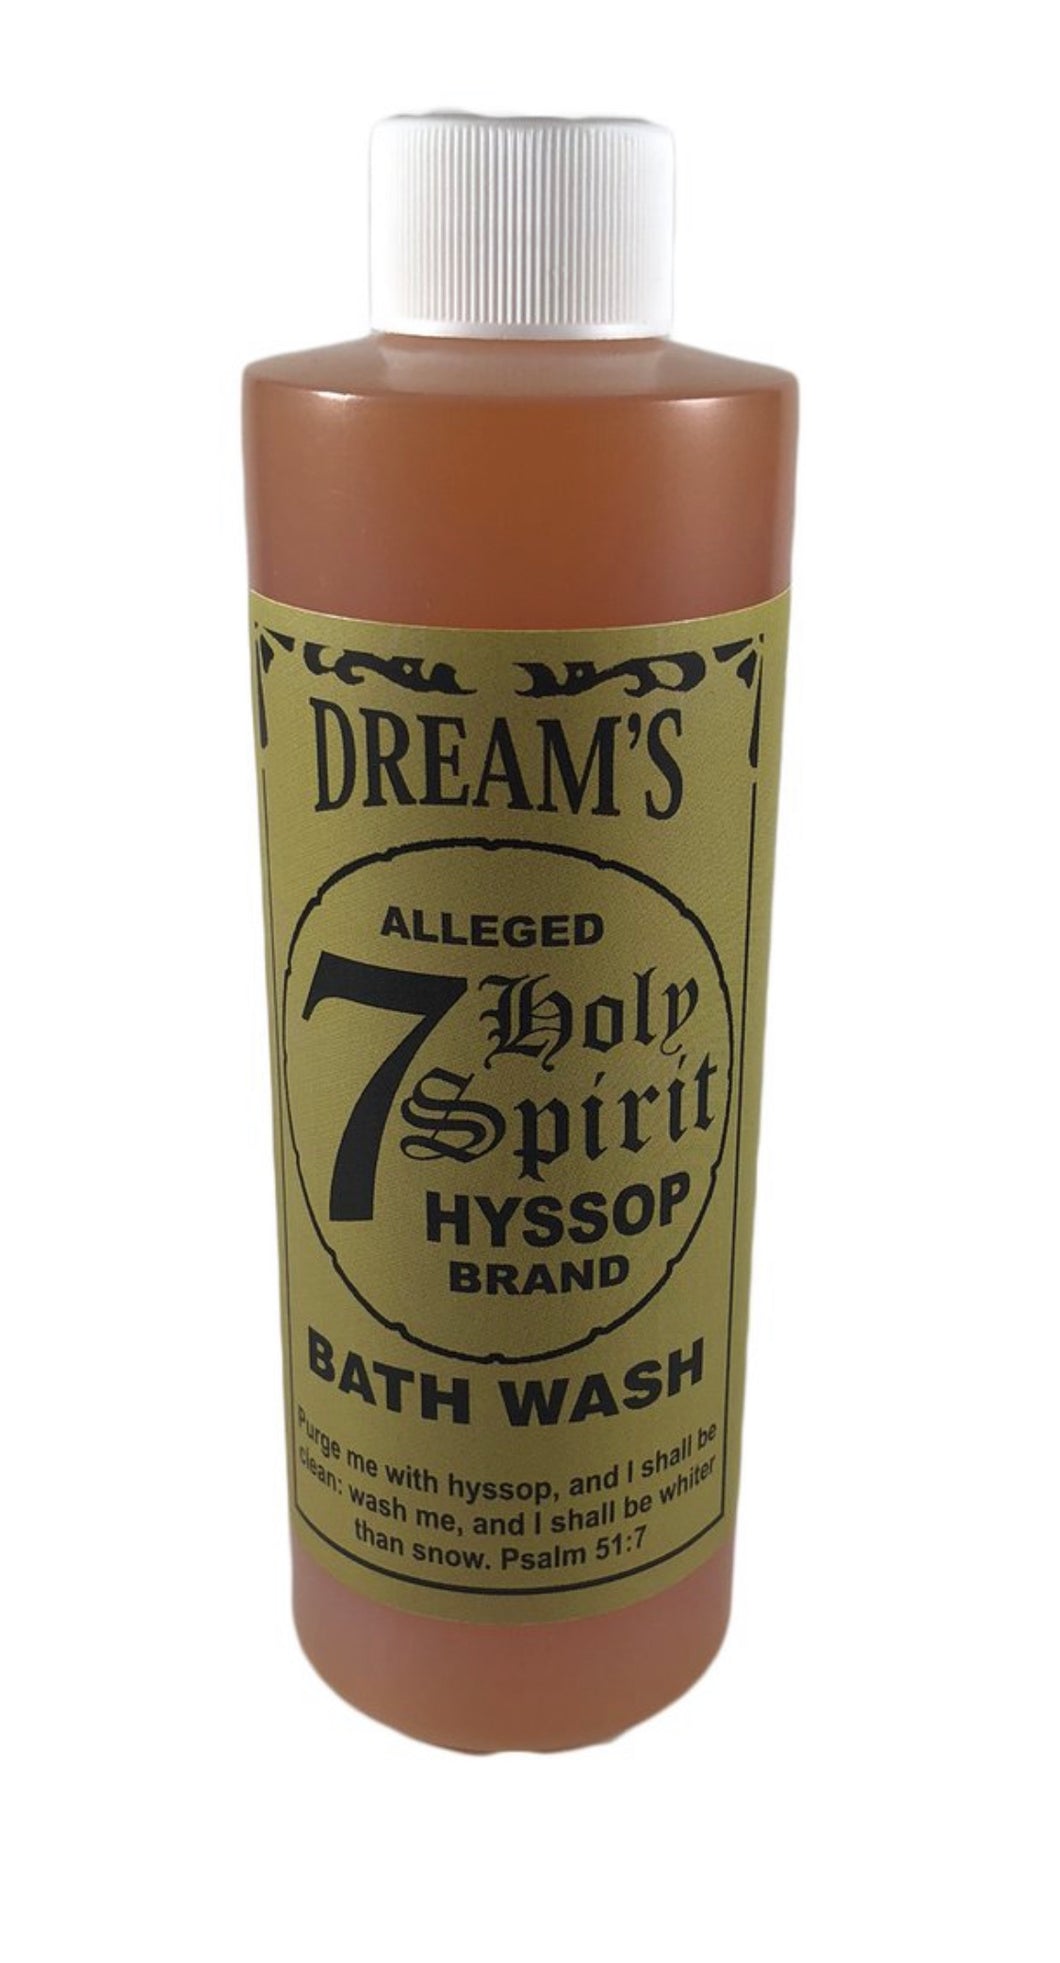 7 Holy Spirit Hyssop Brand Bath Wash